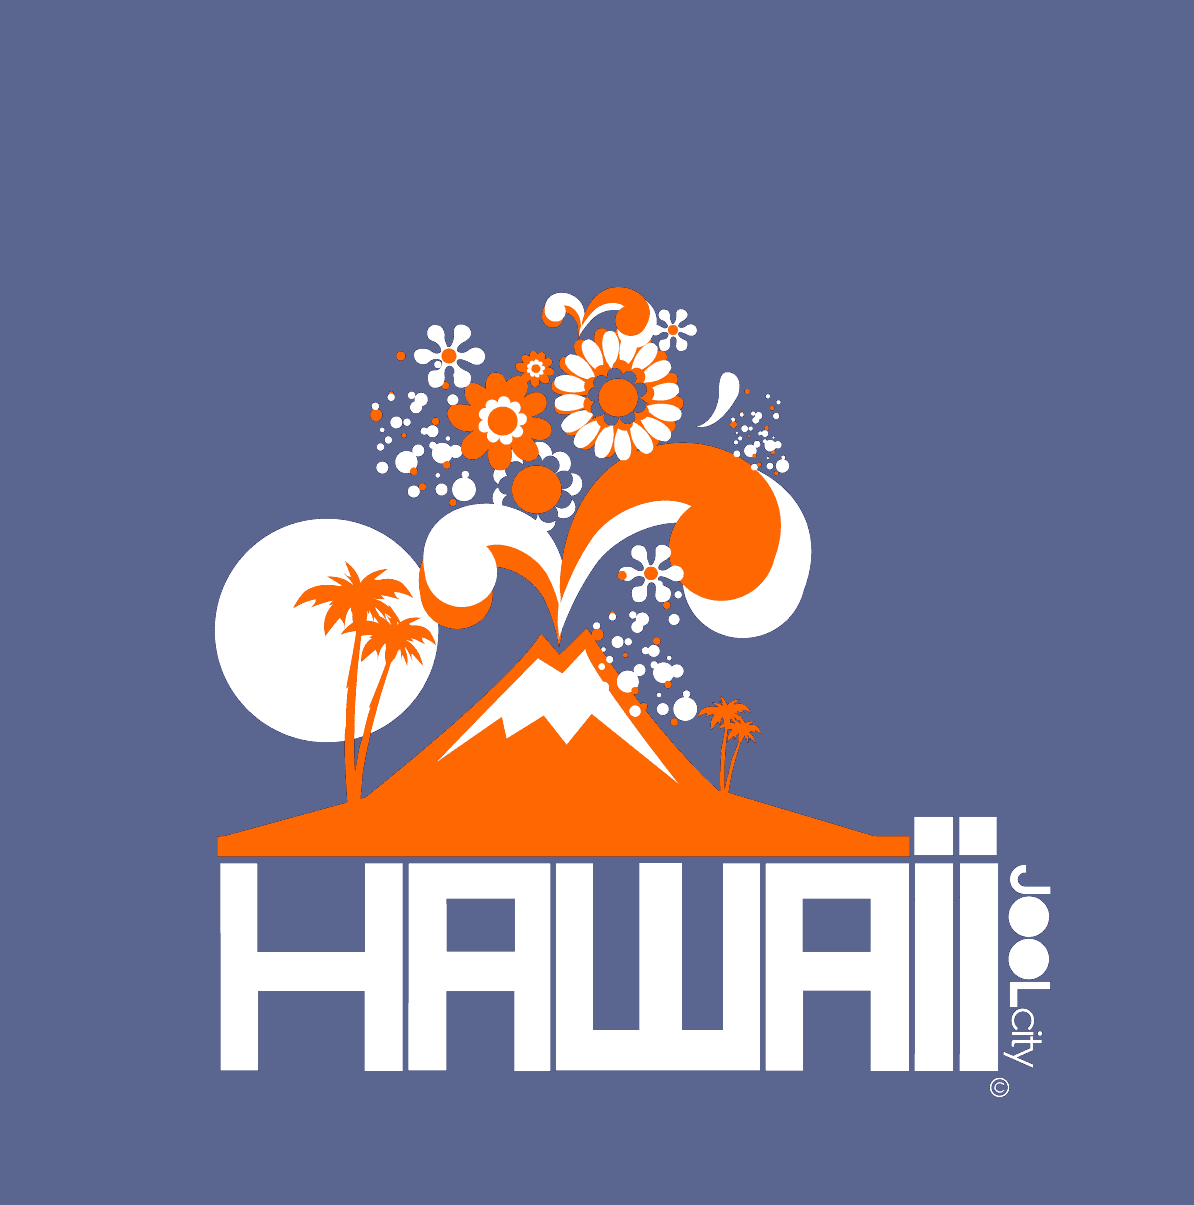 Hawaii  Volcano Eruptous  Women's   Short Sleeve T-Shirt T-Shirt  designed by JOOLcity